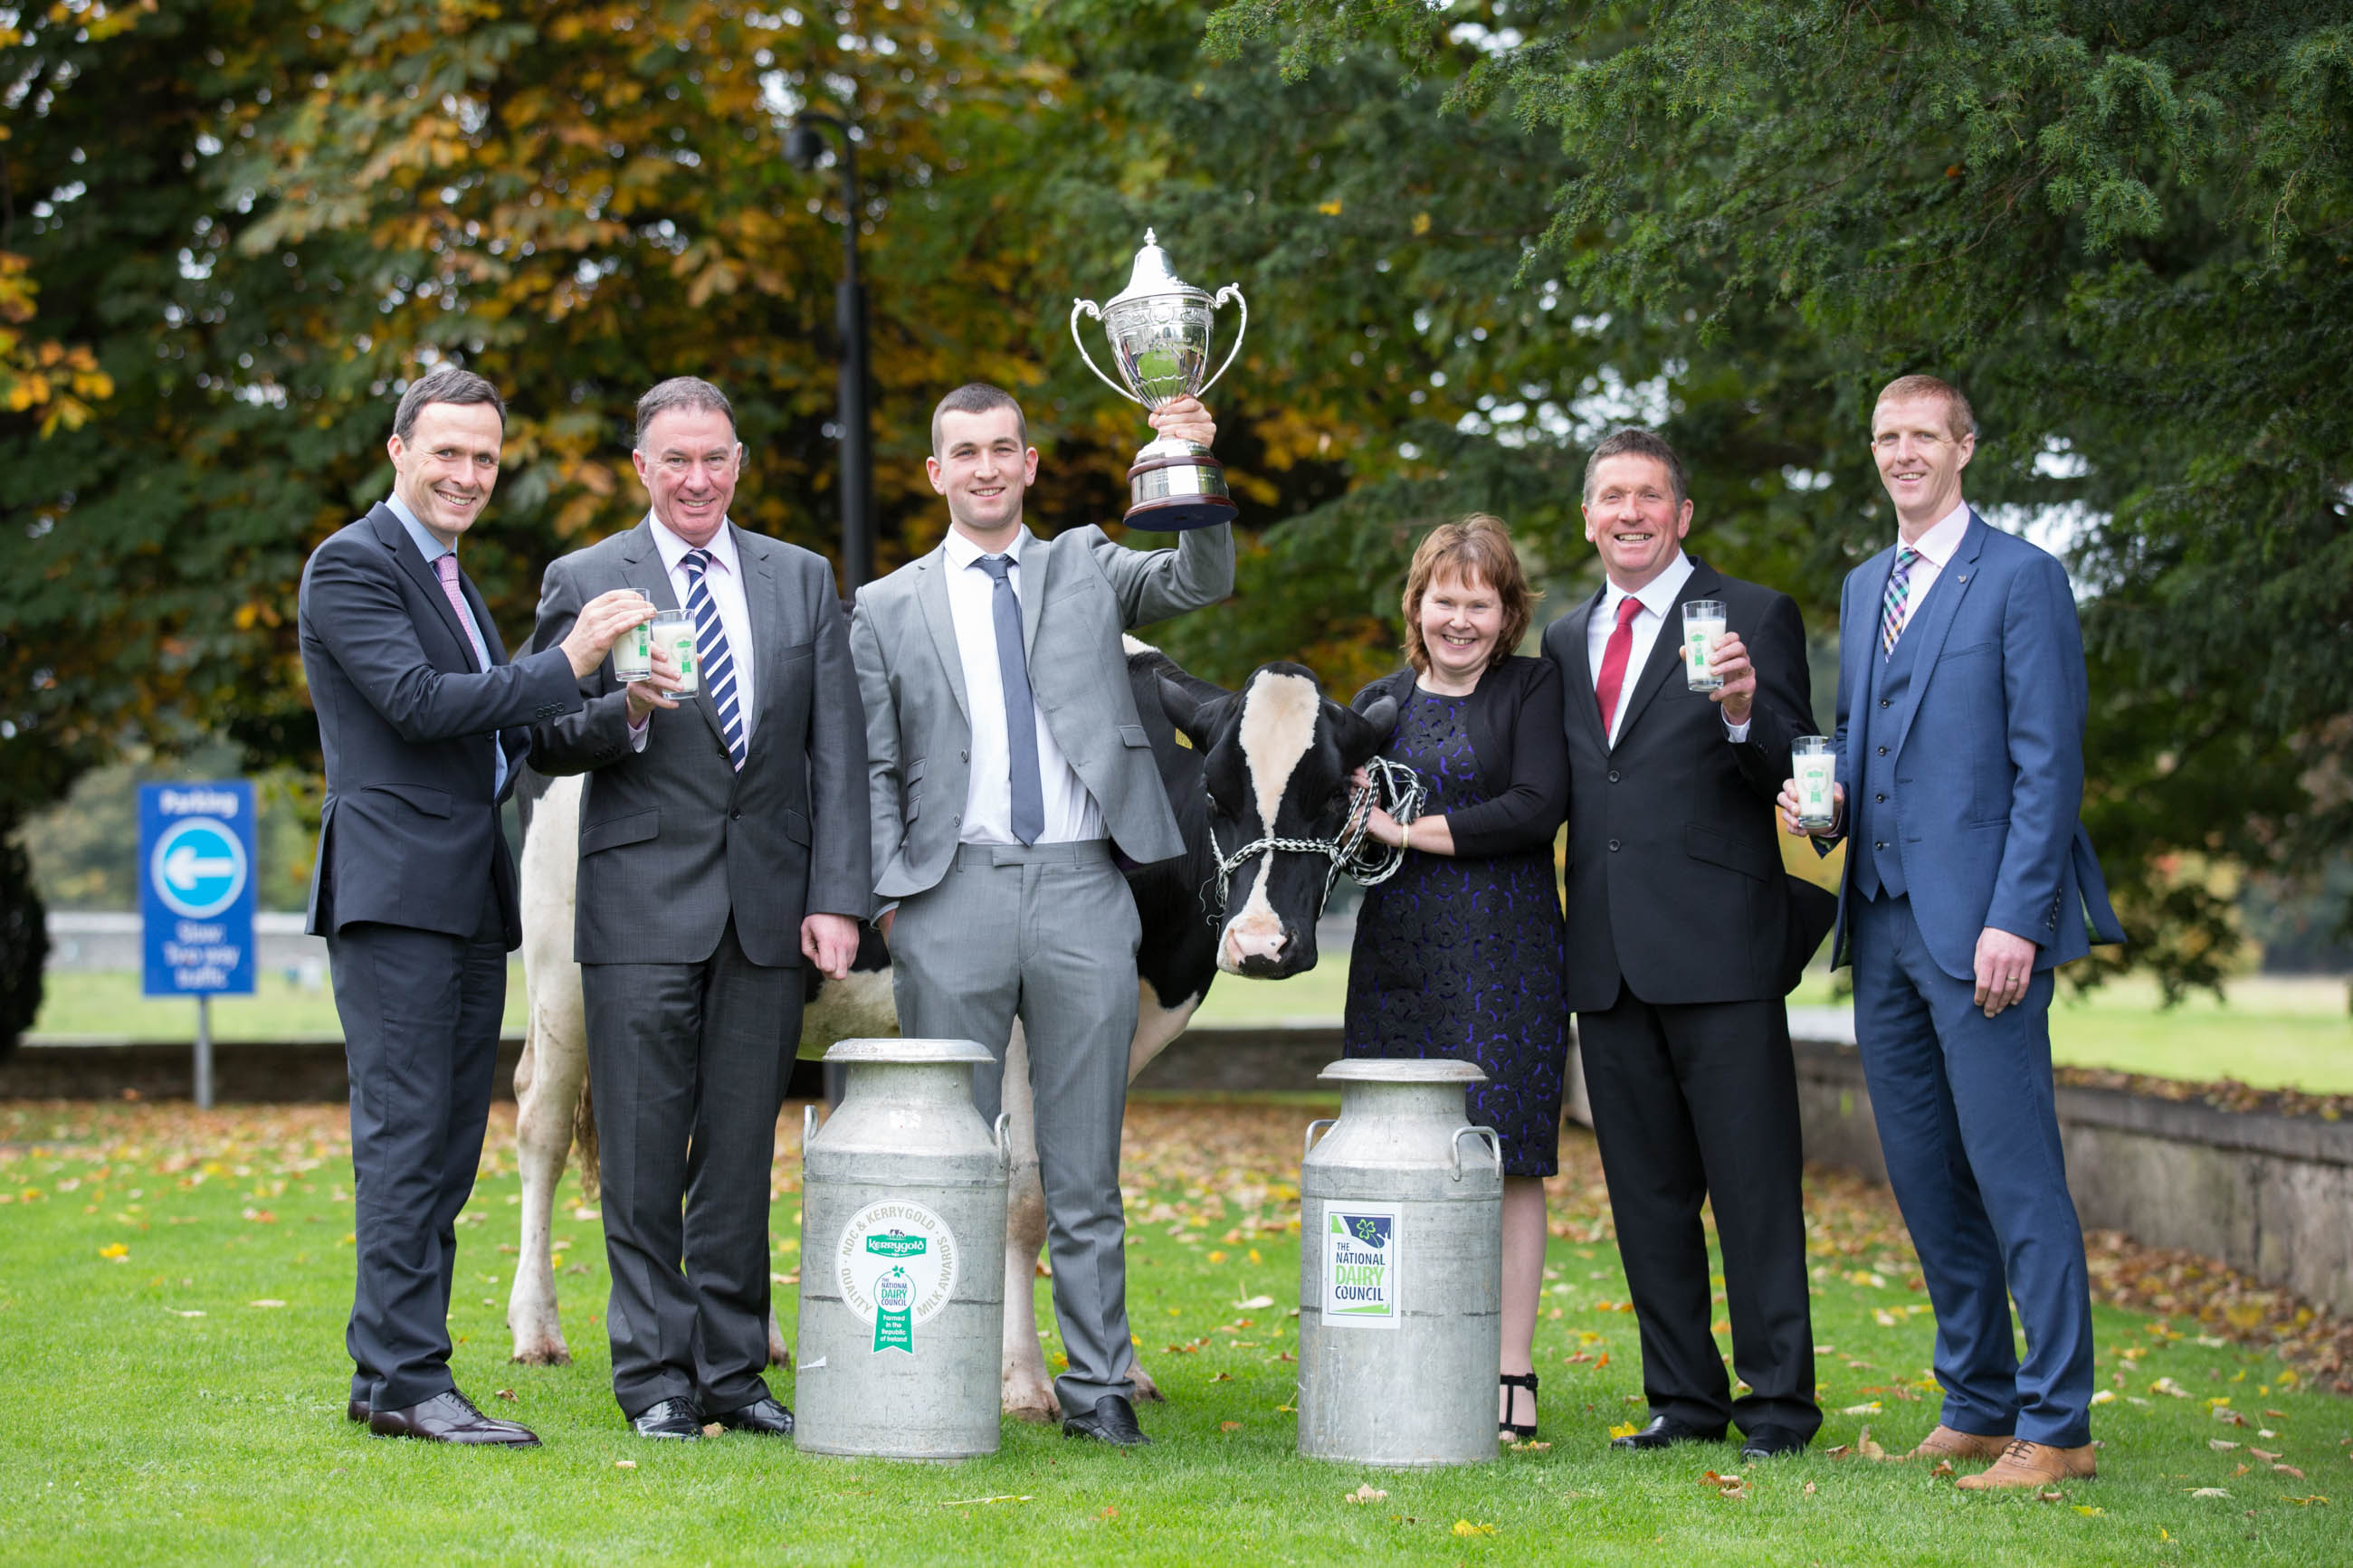 The O'Sullivans of Dunmanus, Co. Cork, celebrate their Quality Milk Award